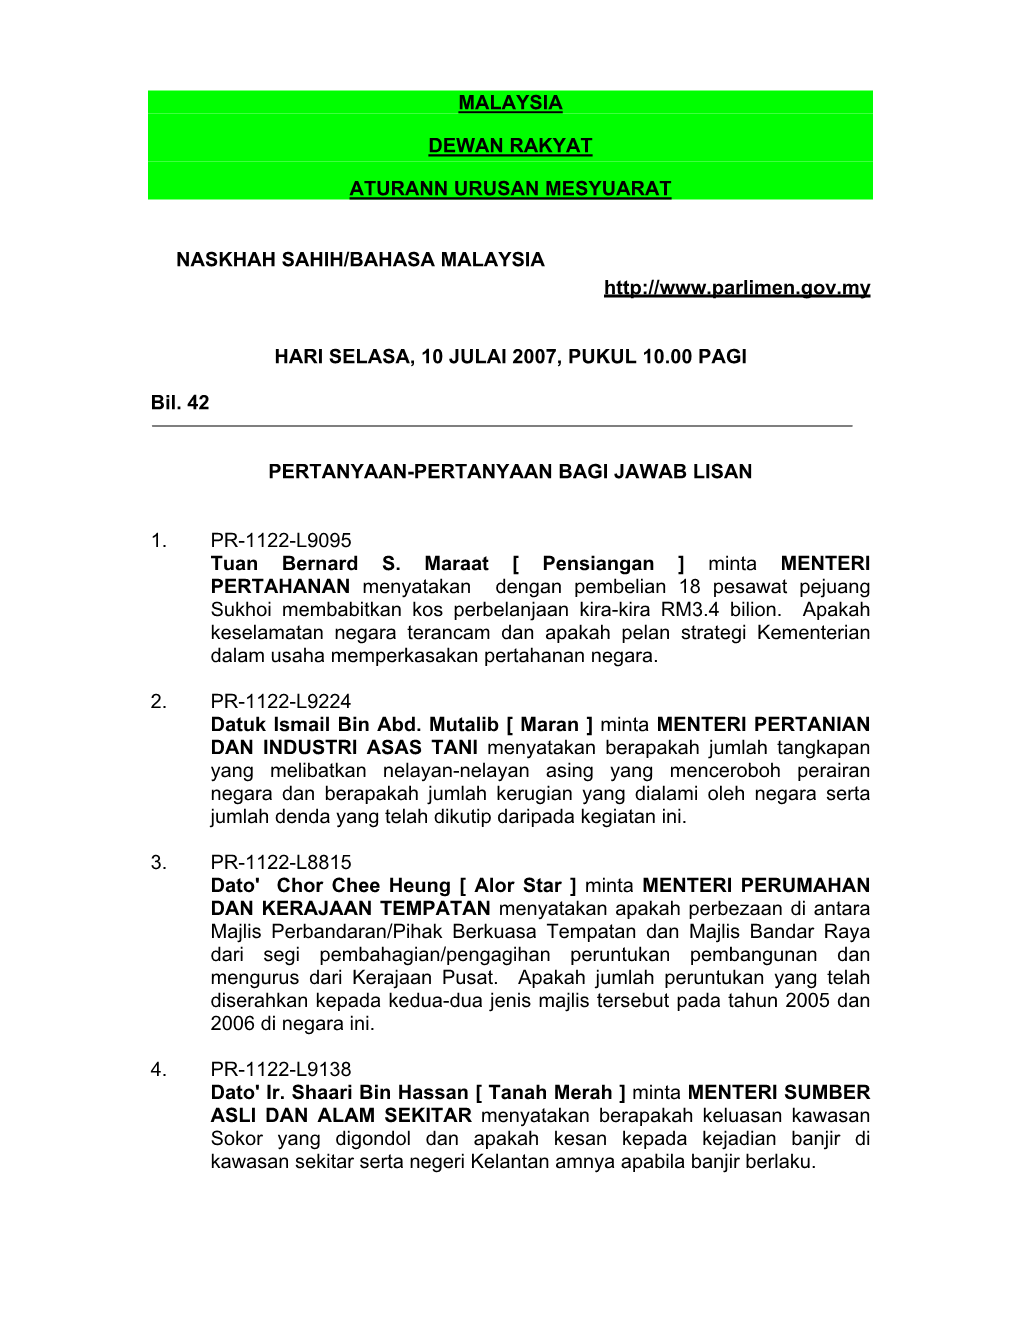 Etnaskhah Sahih/Bahasa Malaysia